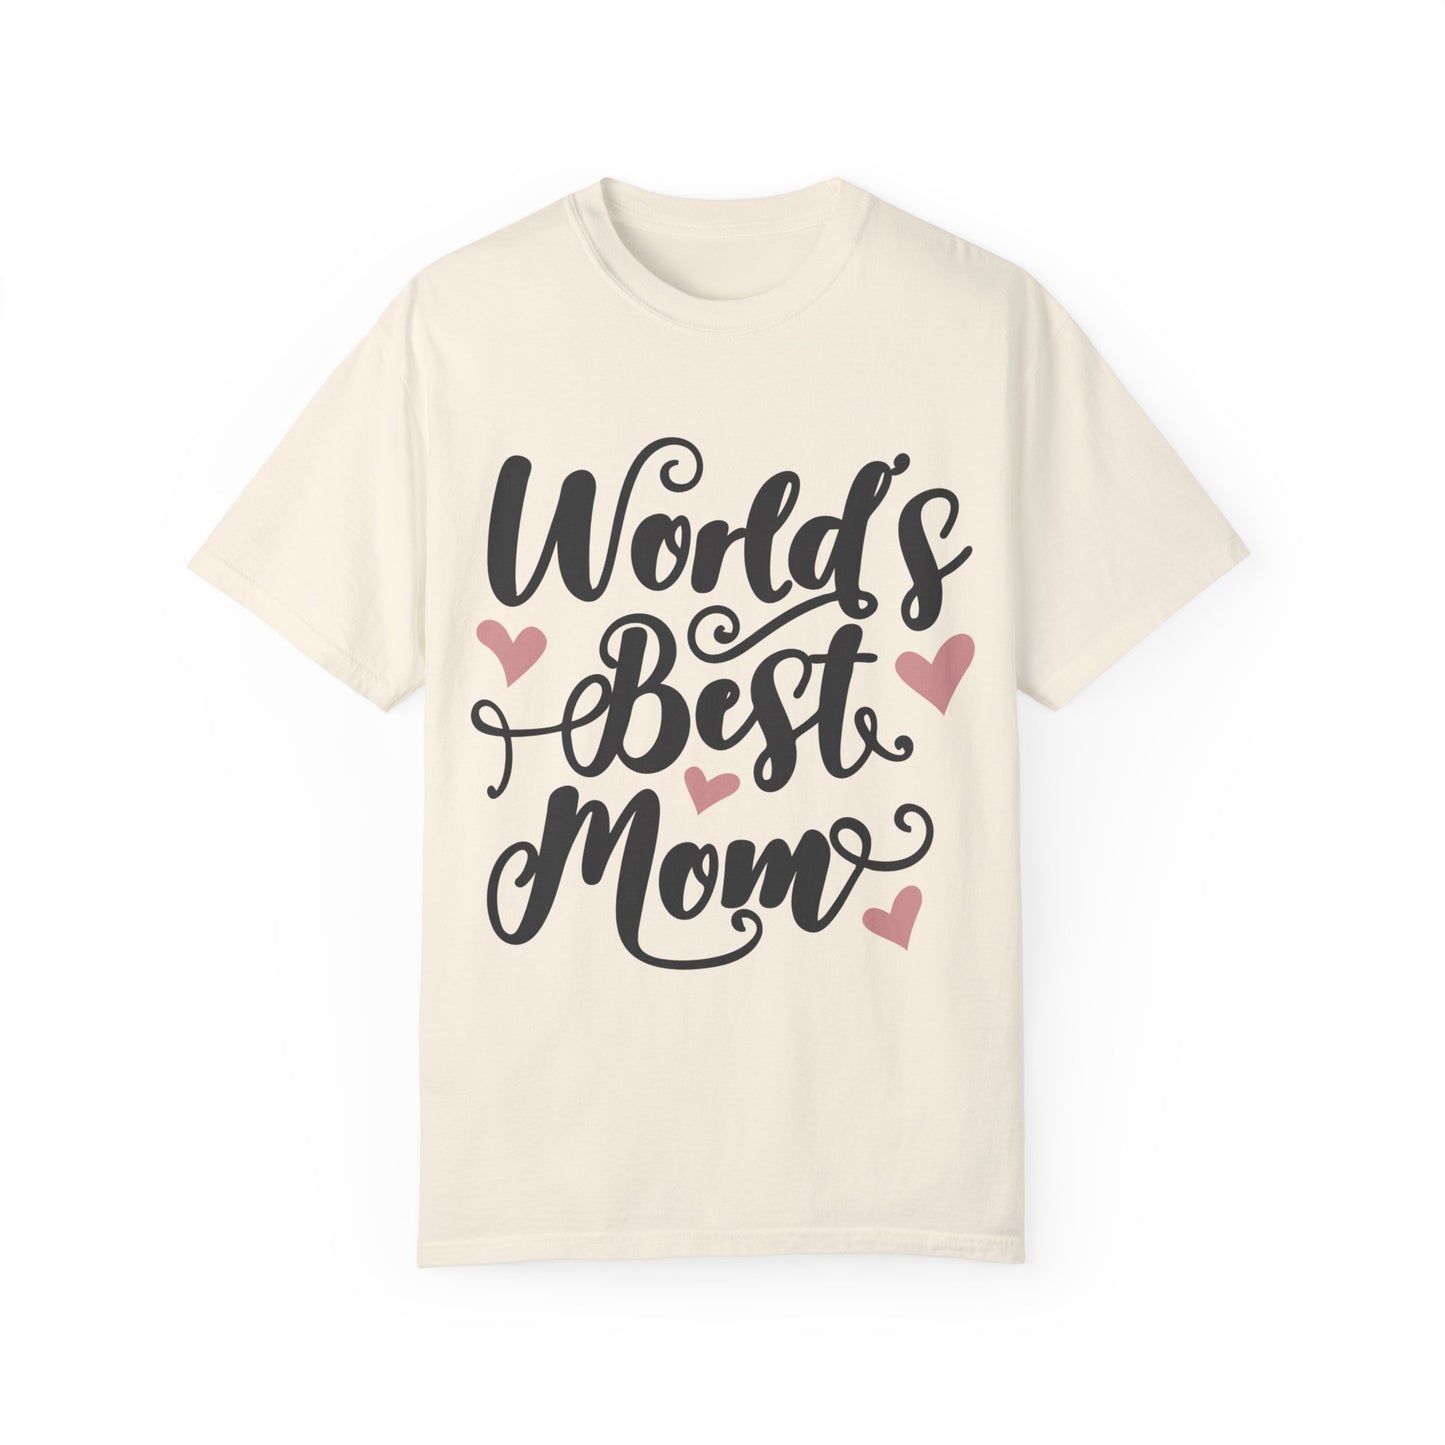 Worl best mom - Unisex Garment-Dyed T-shirt